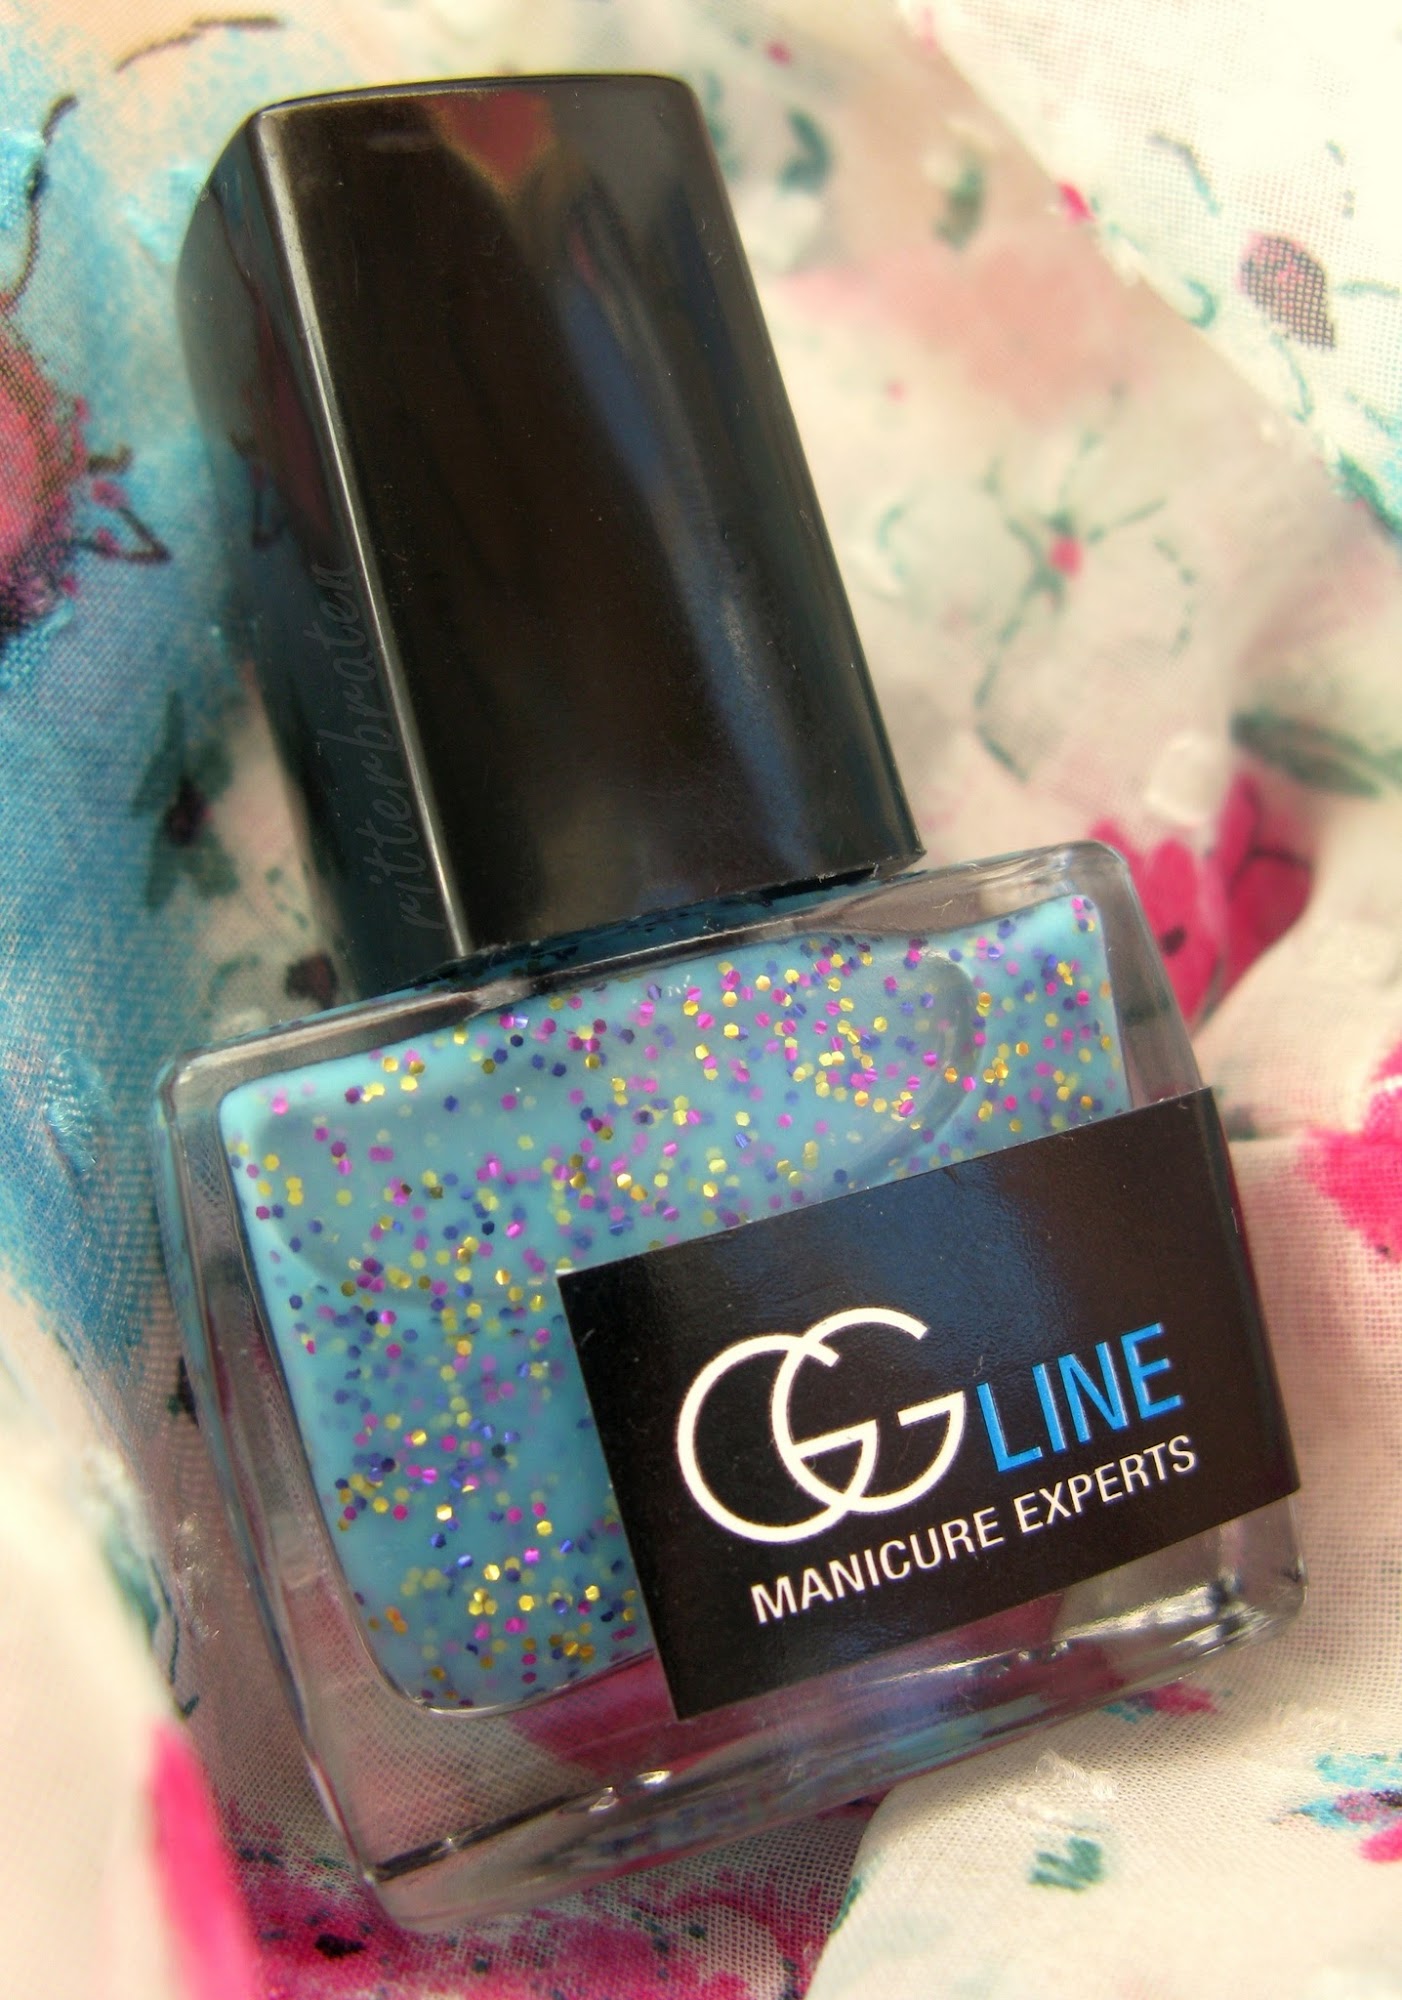 gg line manicure